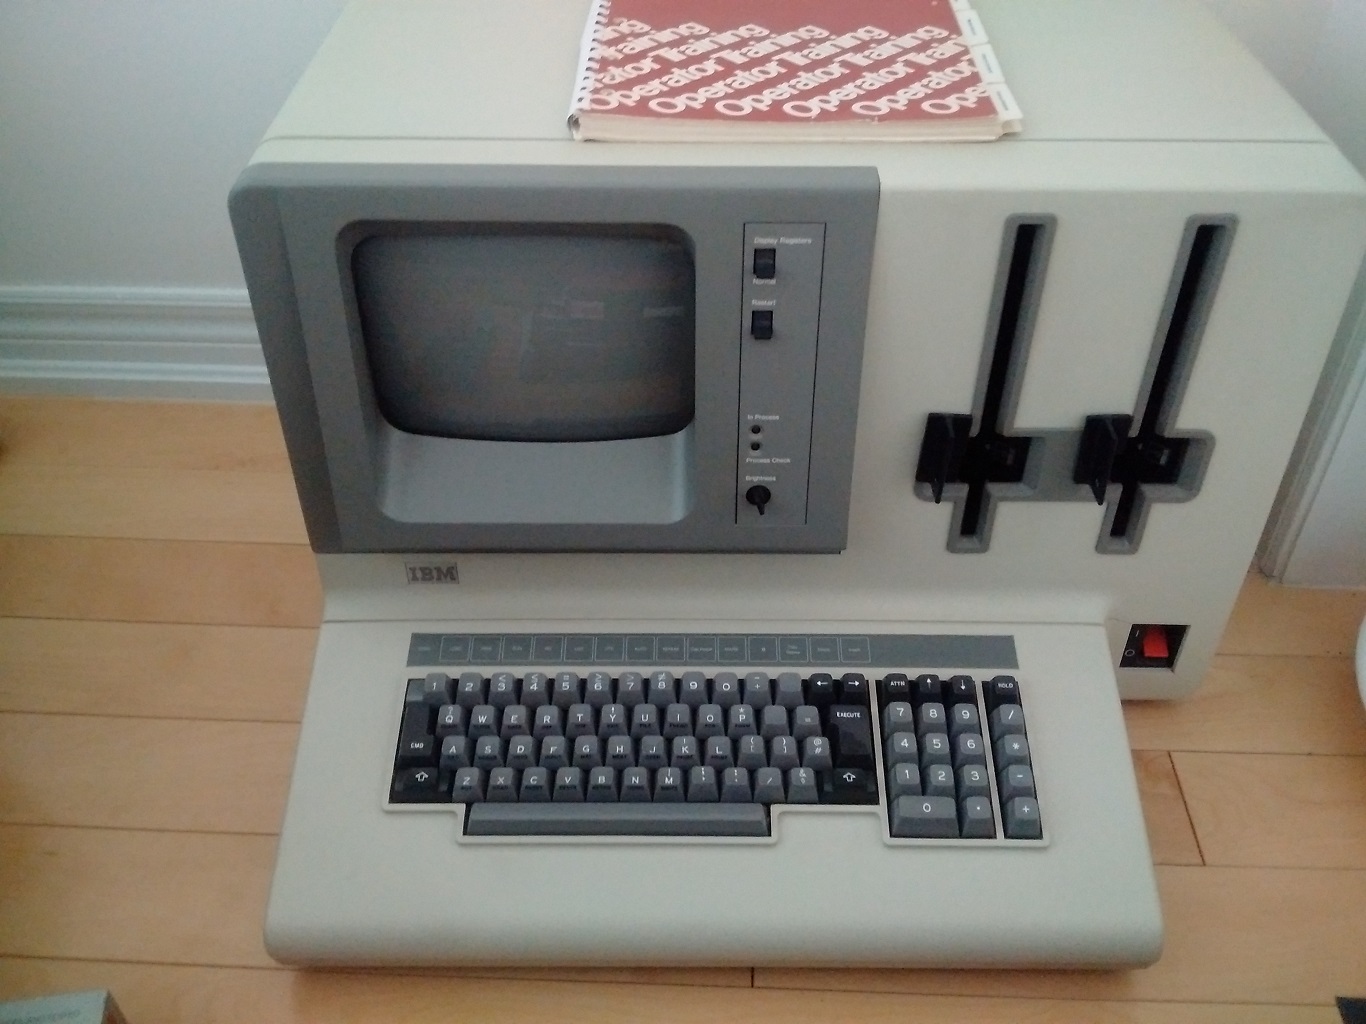 IBM 5120 - computer